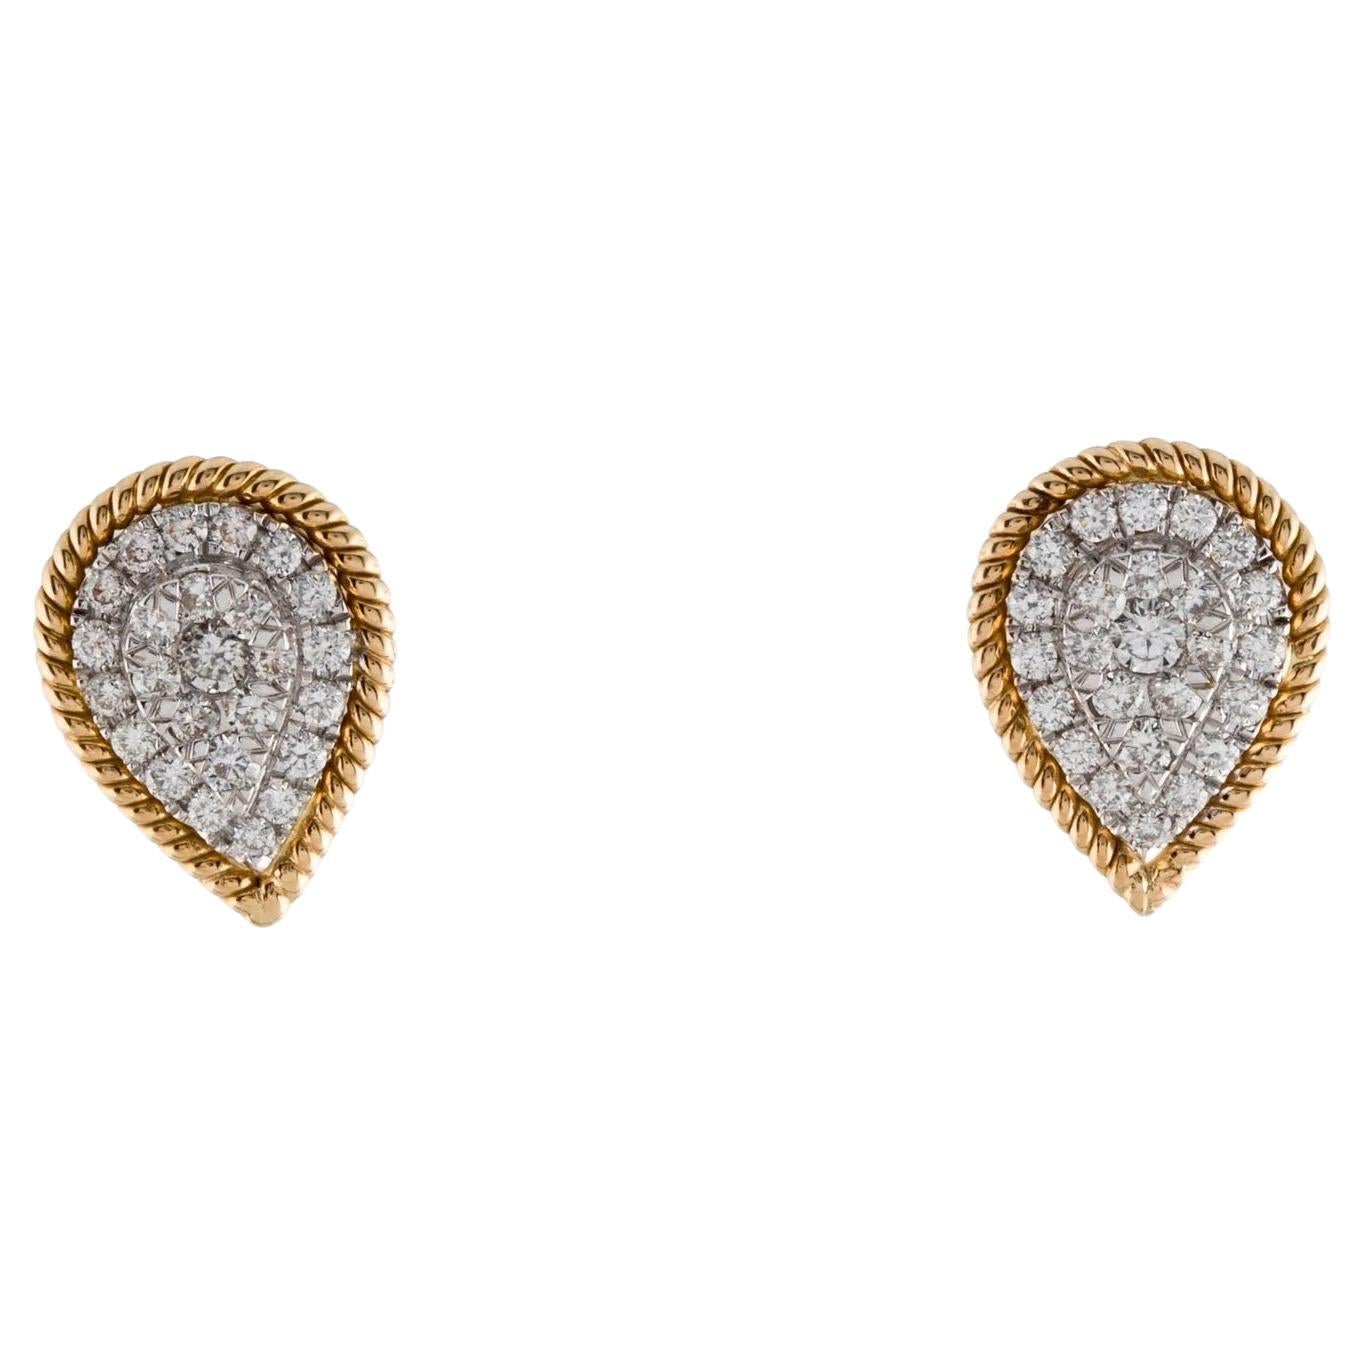  18K Yellow Gold Diamond Stud Earrings, 0.56 Carats